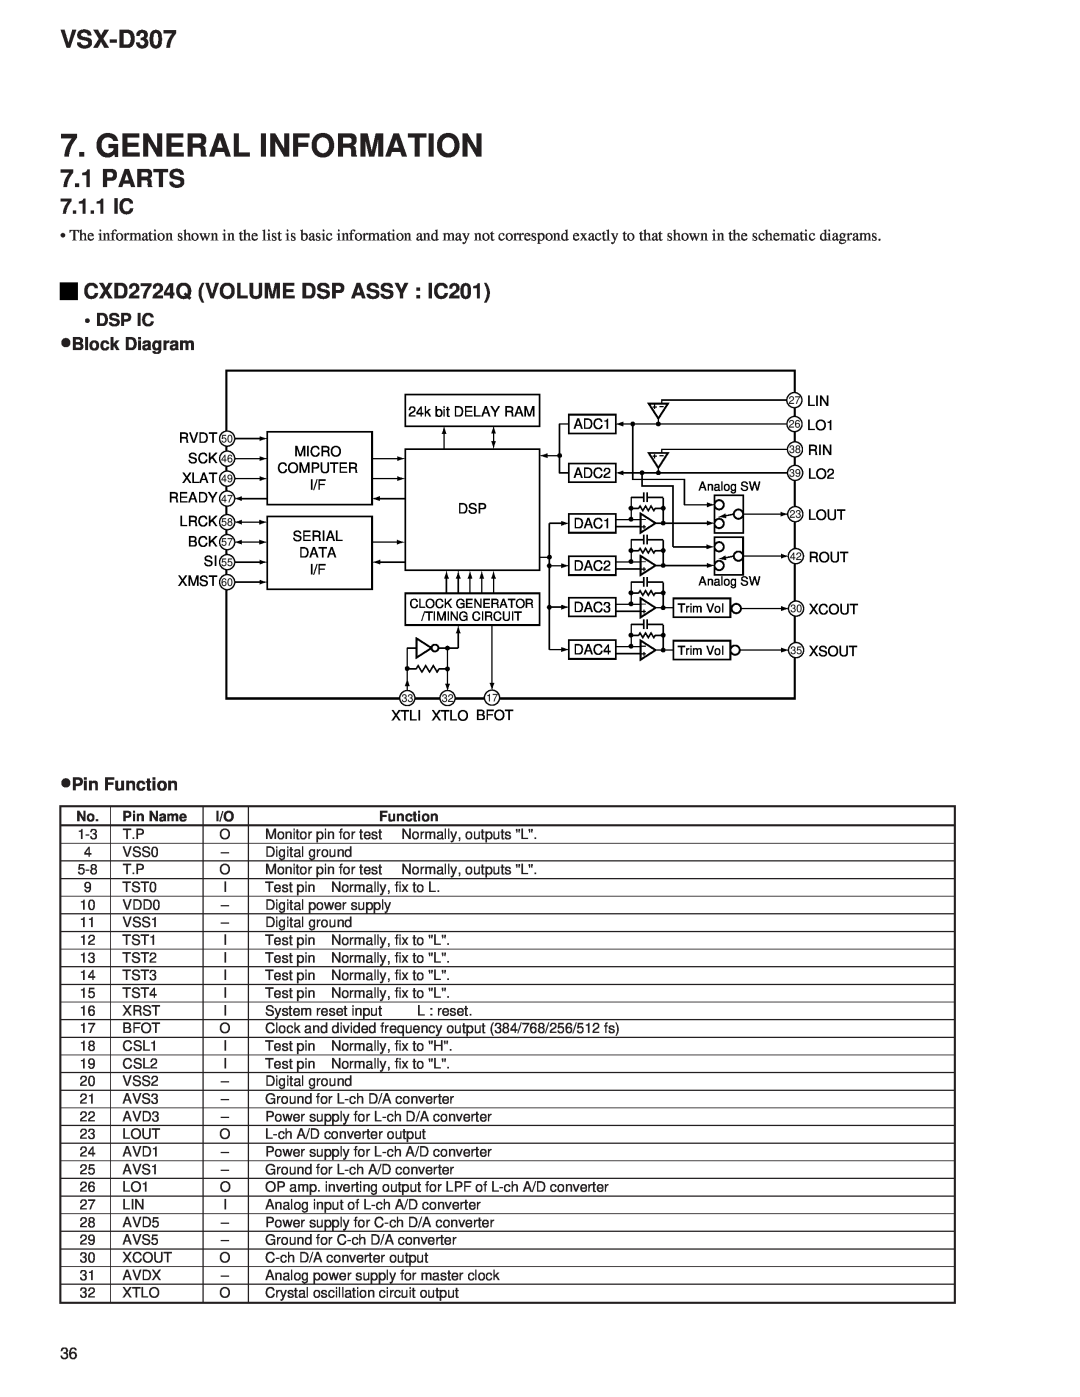 Dolby Laboratories STAV-3770, 31-3043 General Information, Parts, 7.1.1 IC, CXD2724Q VOLUME DSP ASSY IC201, VSX-D307 